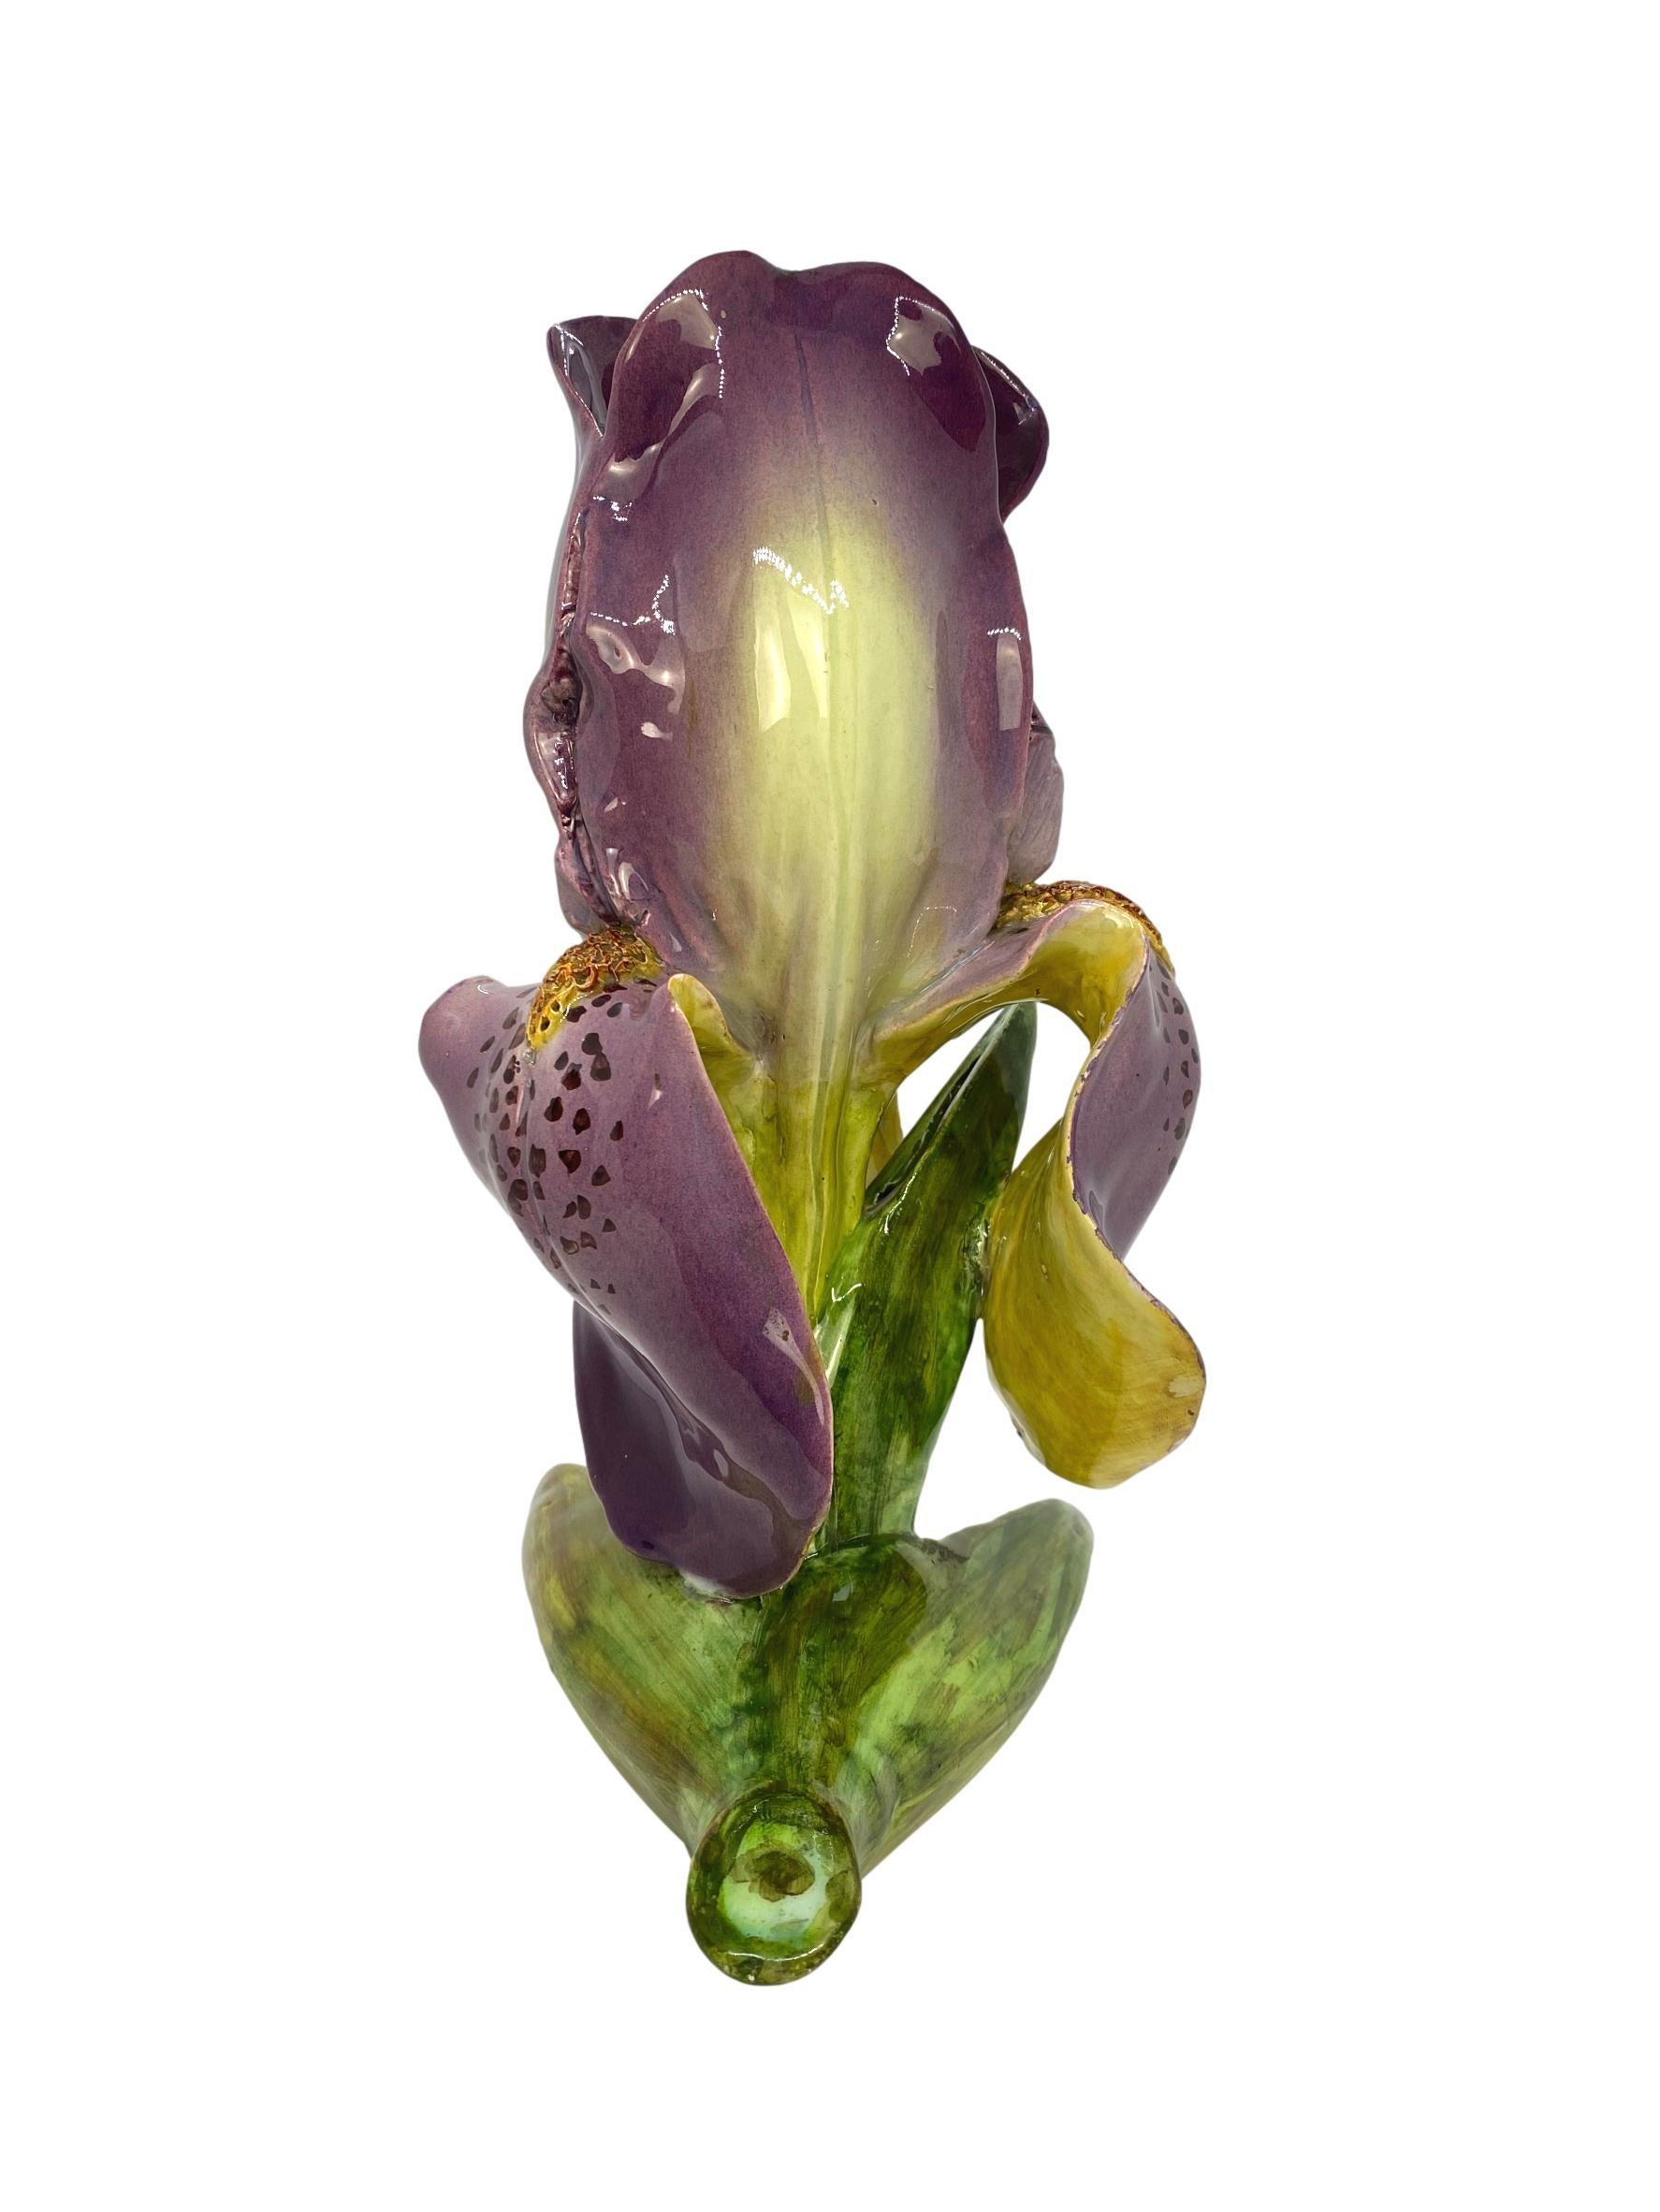 Molded Majolica Iris Vase by Delphin Massier, Lavender Glazed, French, circa 1870